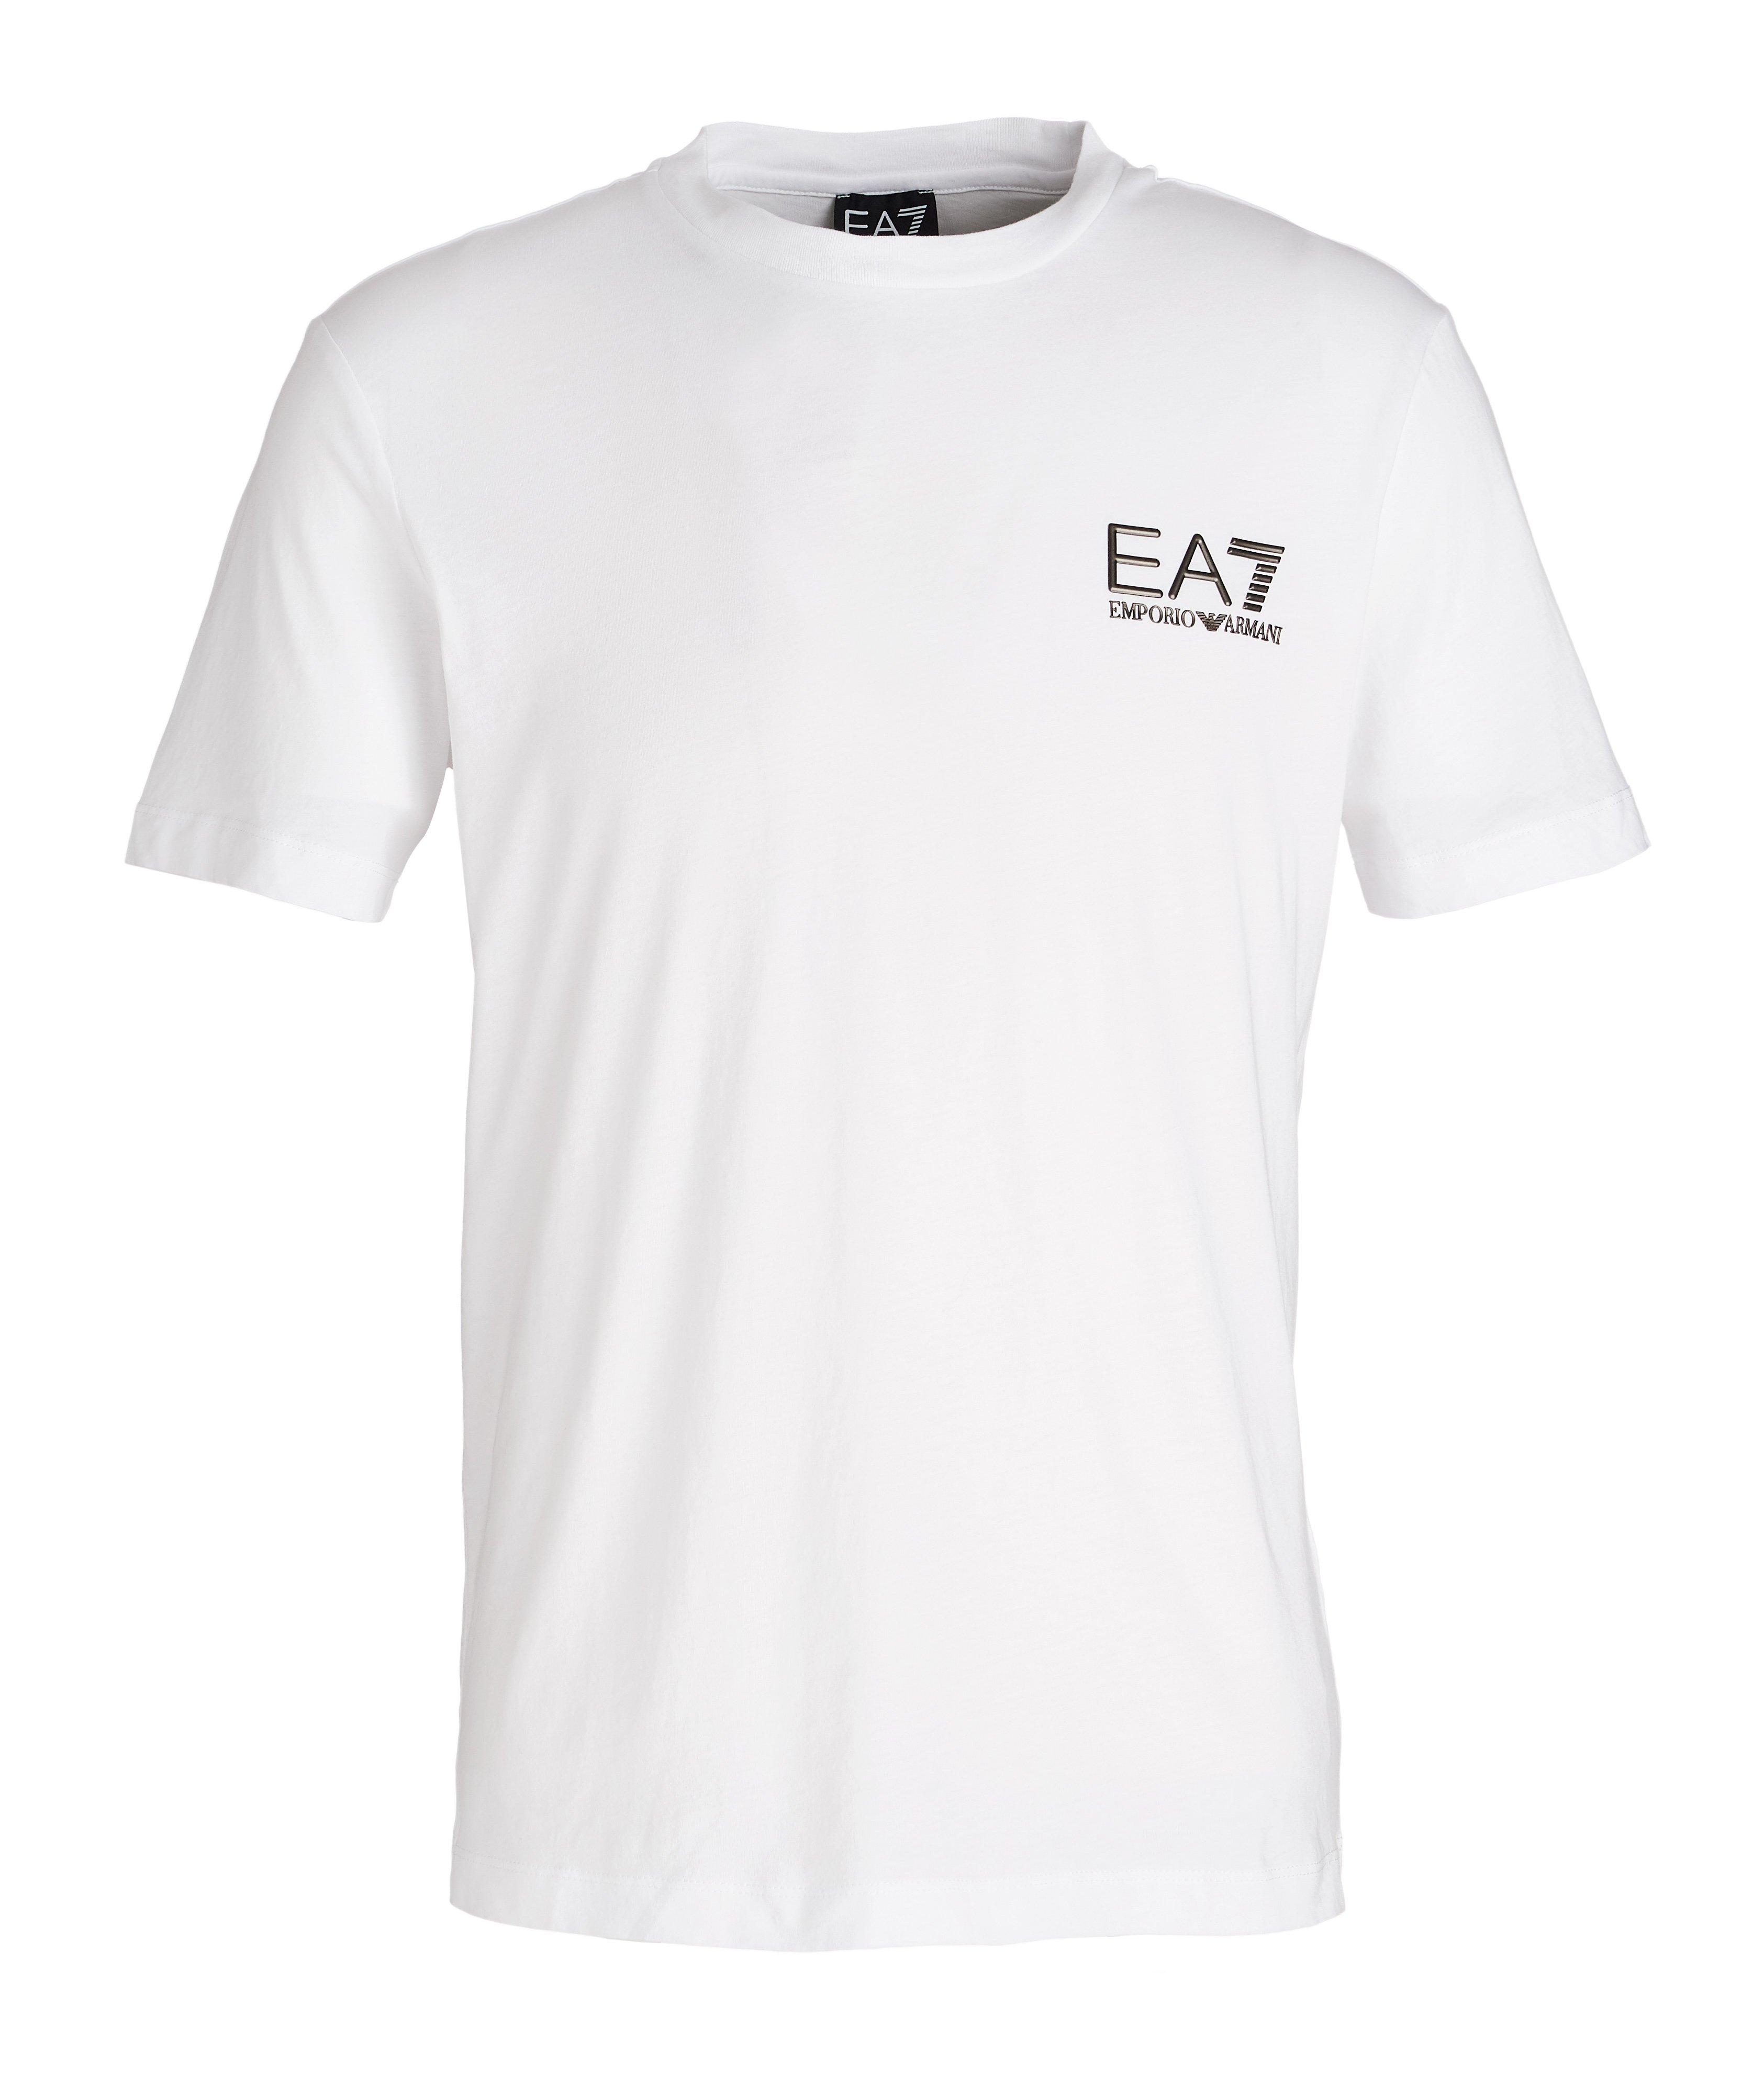 T-shirt en coton avec logo, collection EA7 image 0